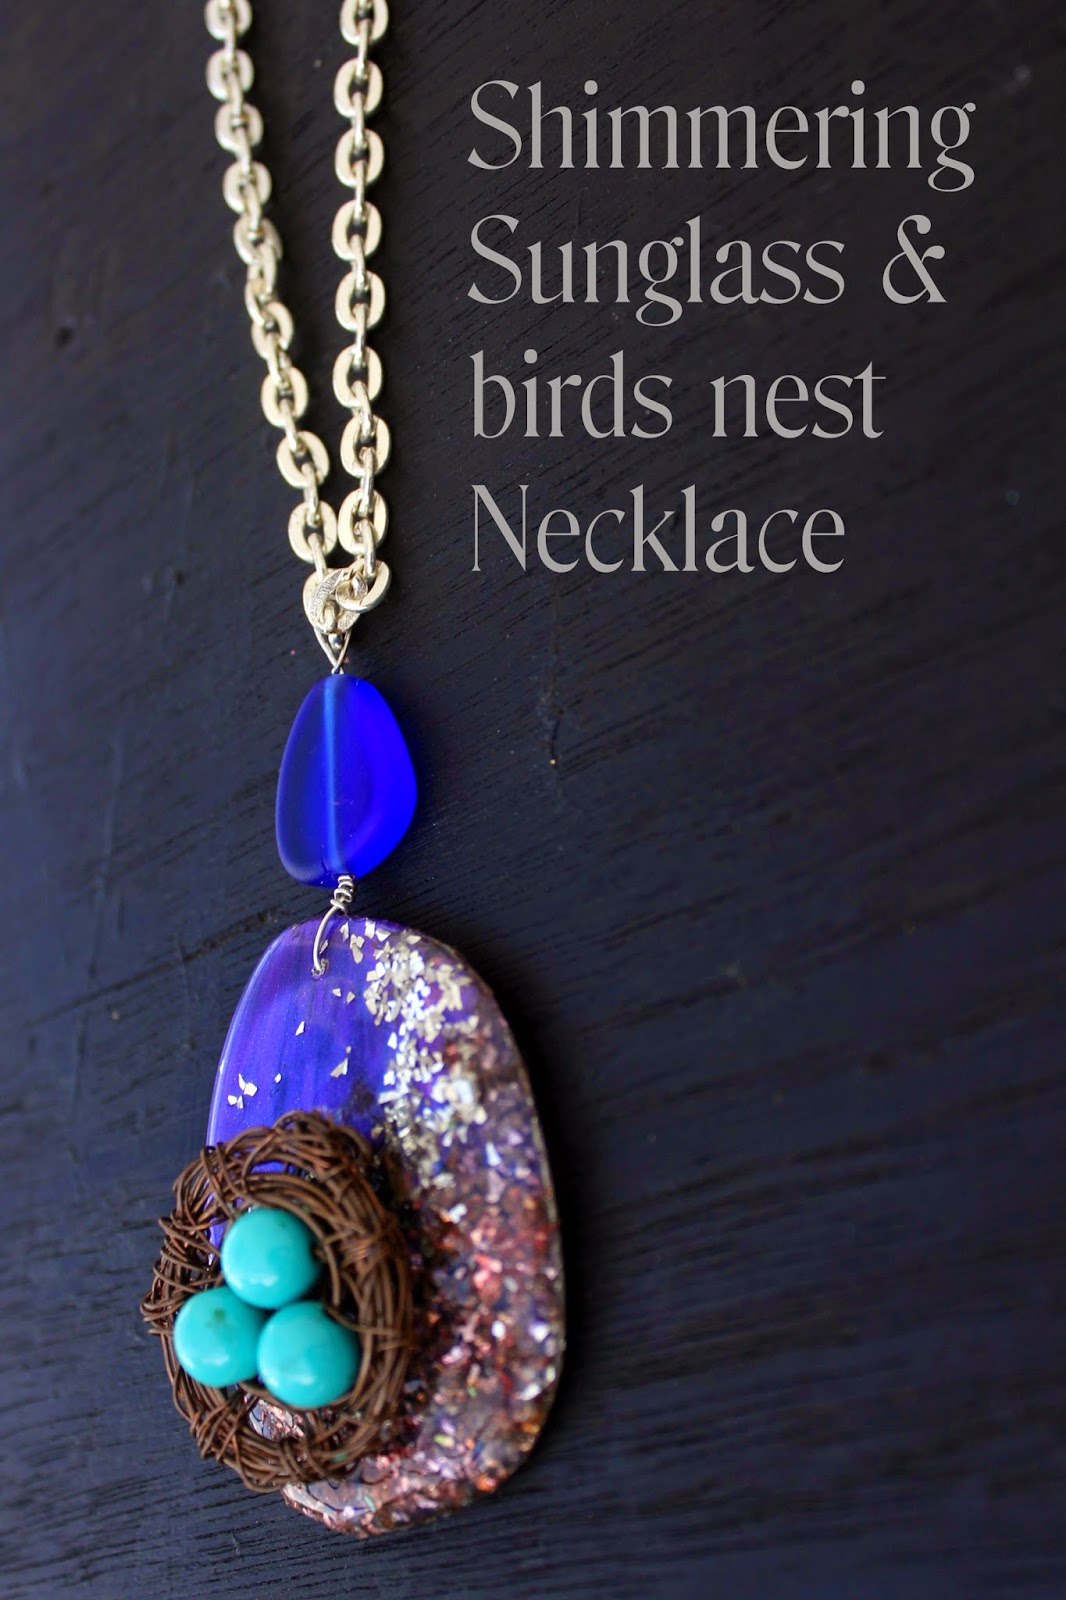 http://www.craftpaperscissors.com/how-to-make-a-bird-nest-necklace/